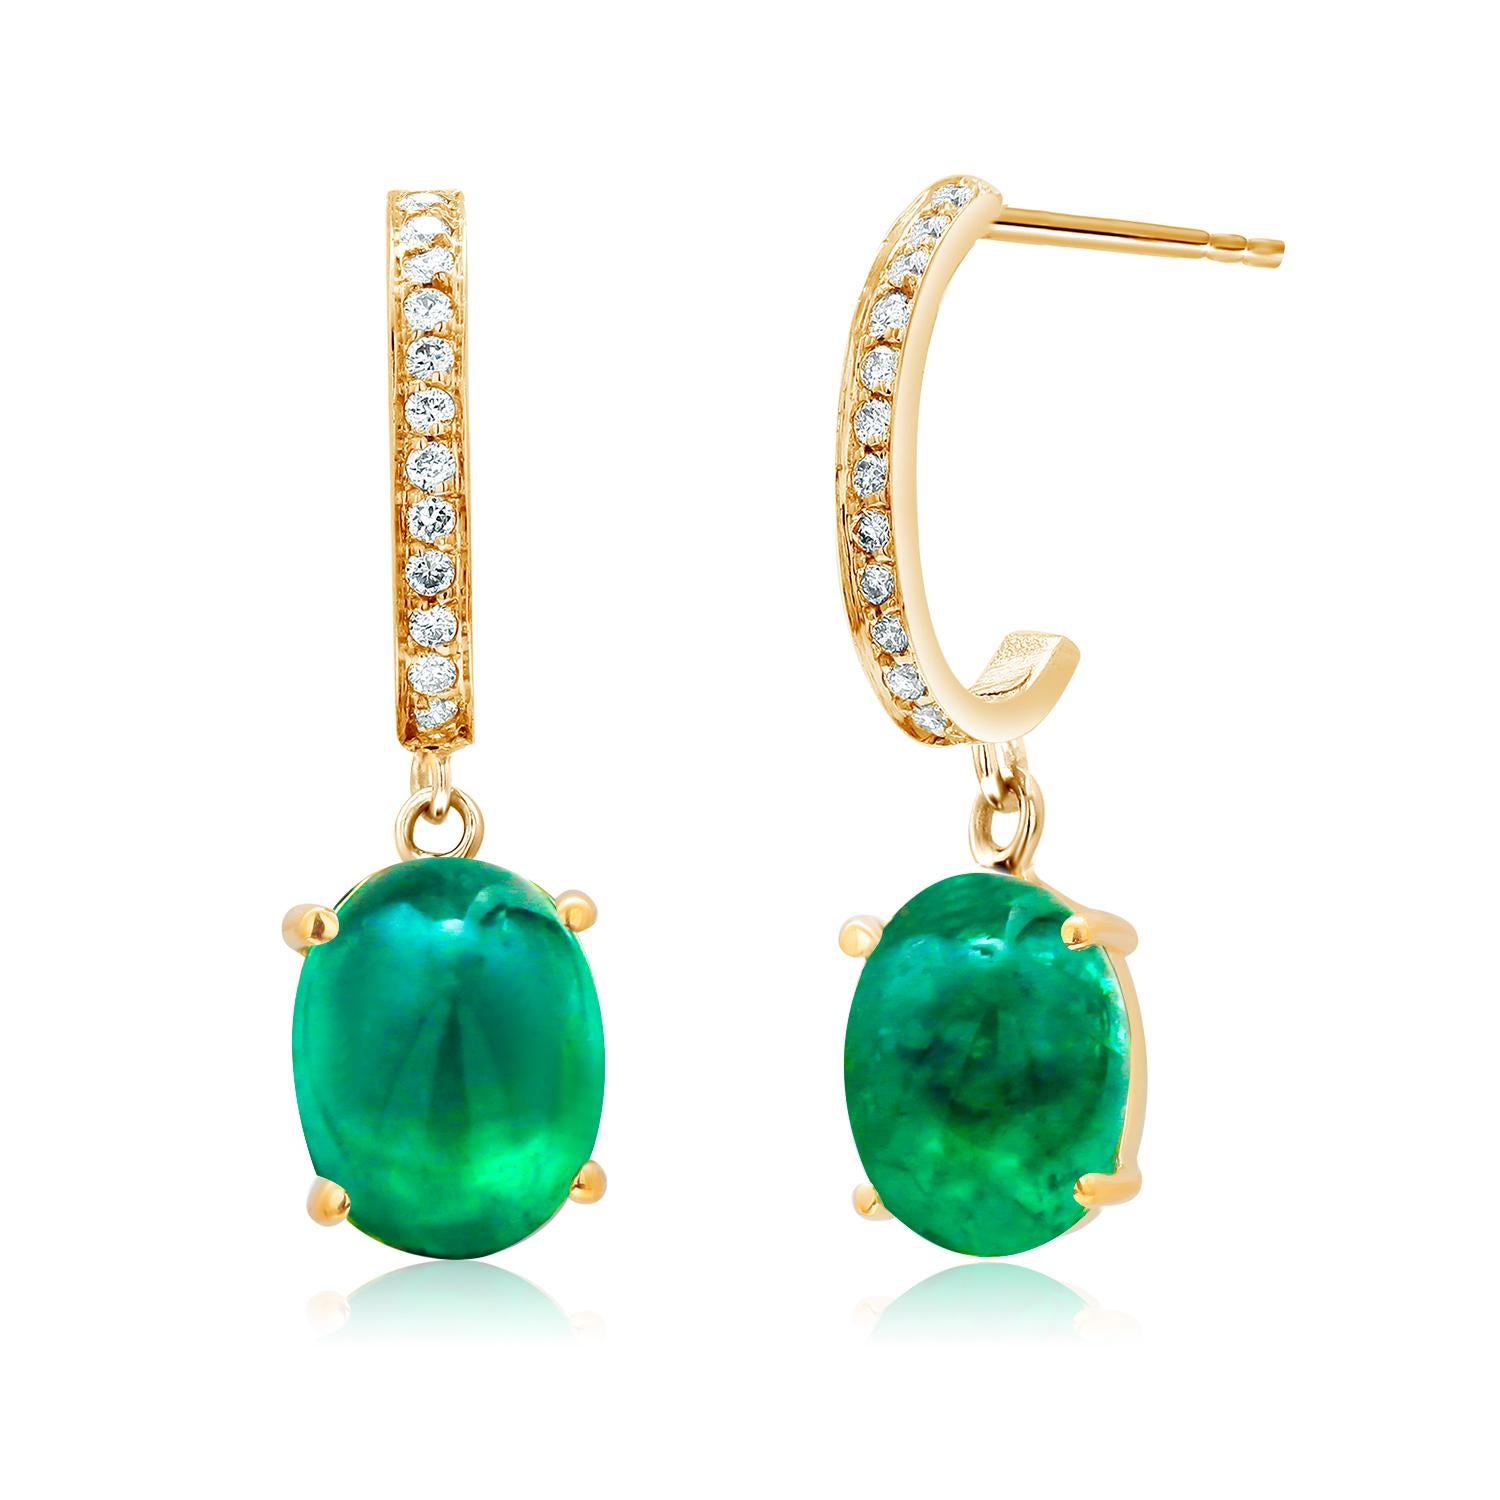 Oval Cut Cabochon Emerald Diamond Gold Hoop Earrings Weighing 4.48 Carat